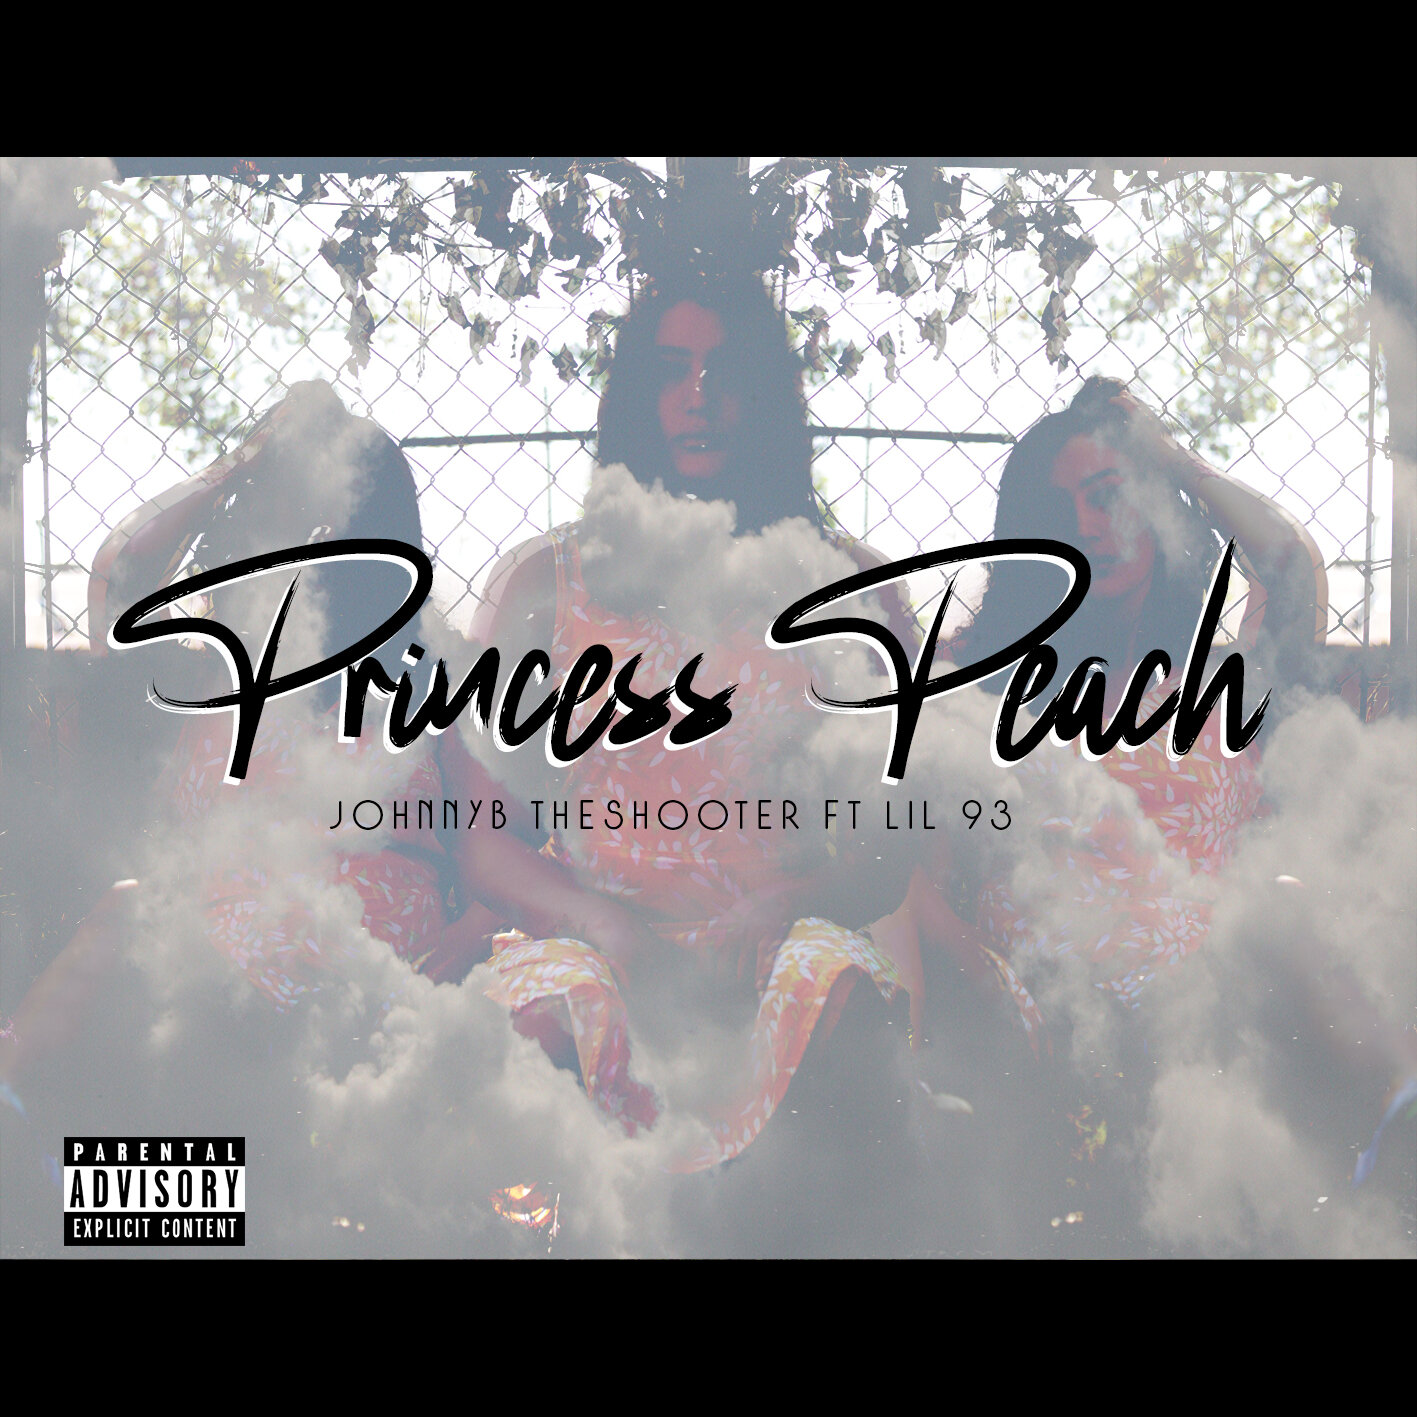 Princess Peach - JohnnyB theShooter ft Lil 93 COVER.jpg